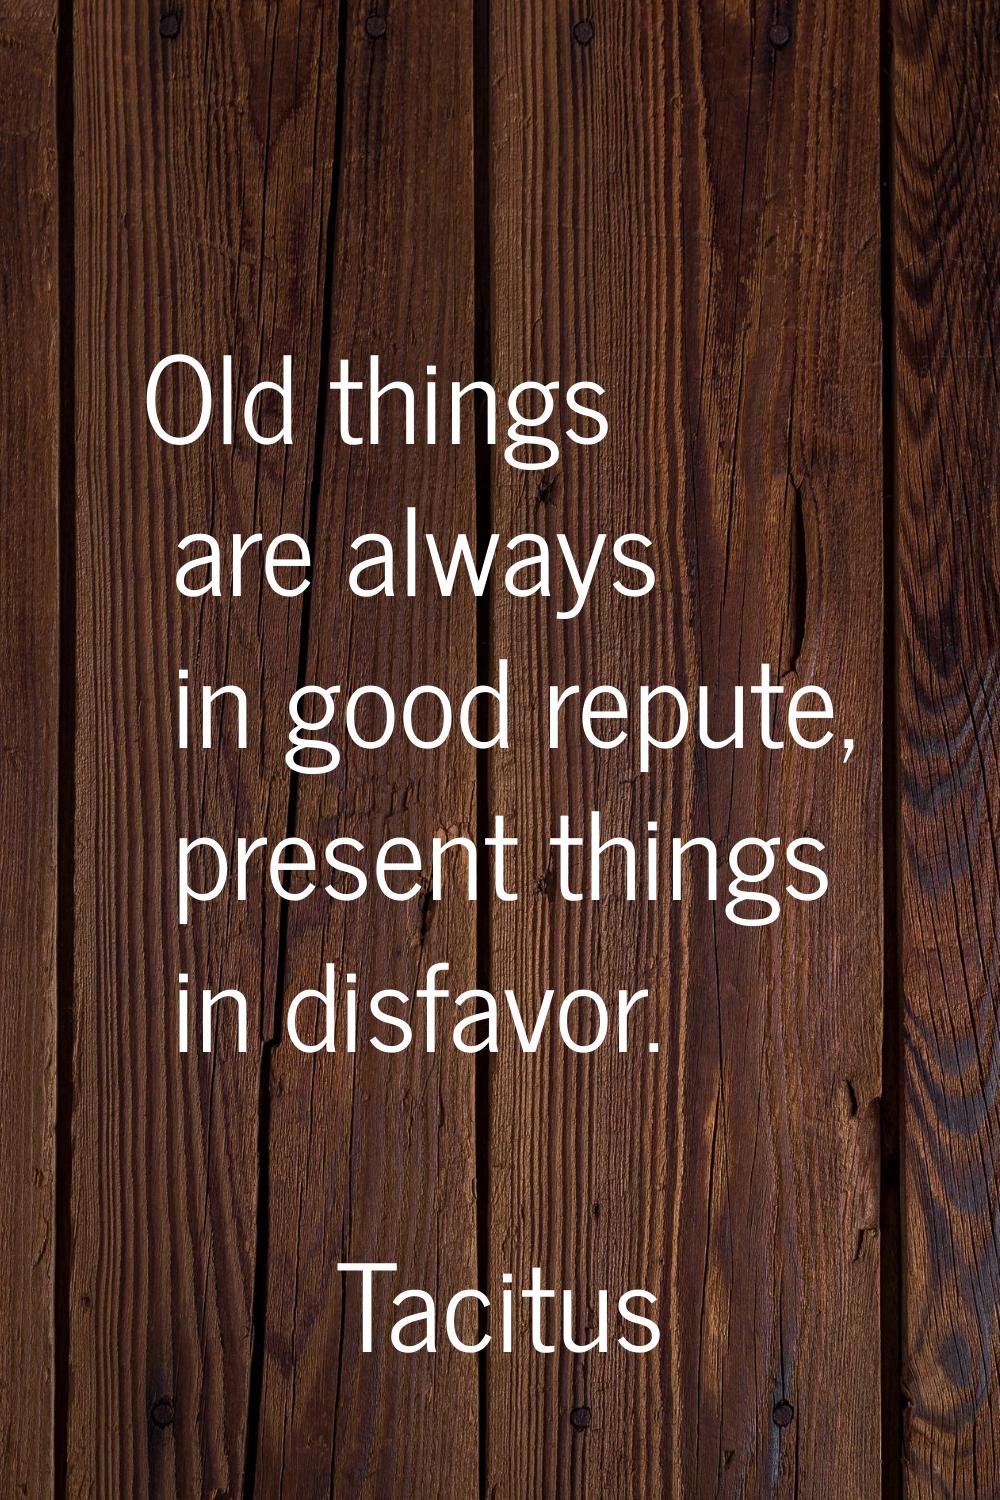 Old things are always in good repute, present things in disfavor.